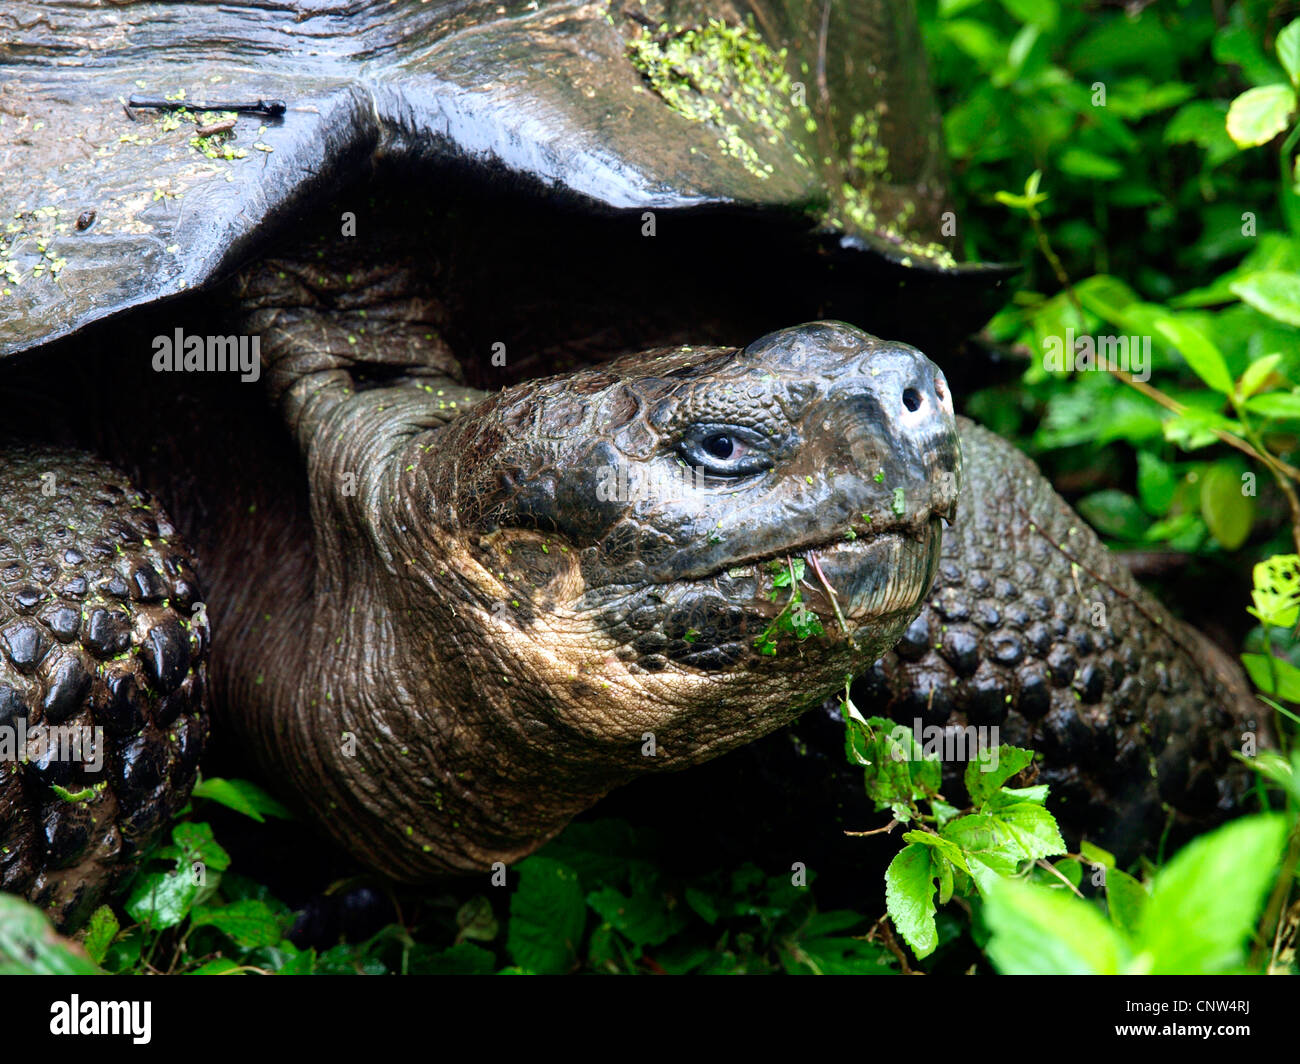 Galapagos giant tortoise (Geochelone elephantopus, Geochelone nigra, Testudo elephantopus, Chelonoides elephantopus), eating, Ecuador, Galapagos Islands Stock Photo